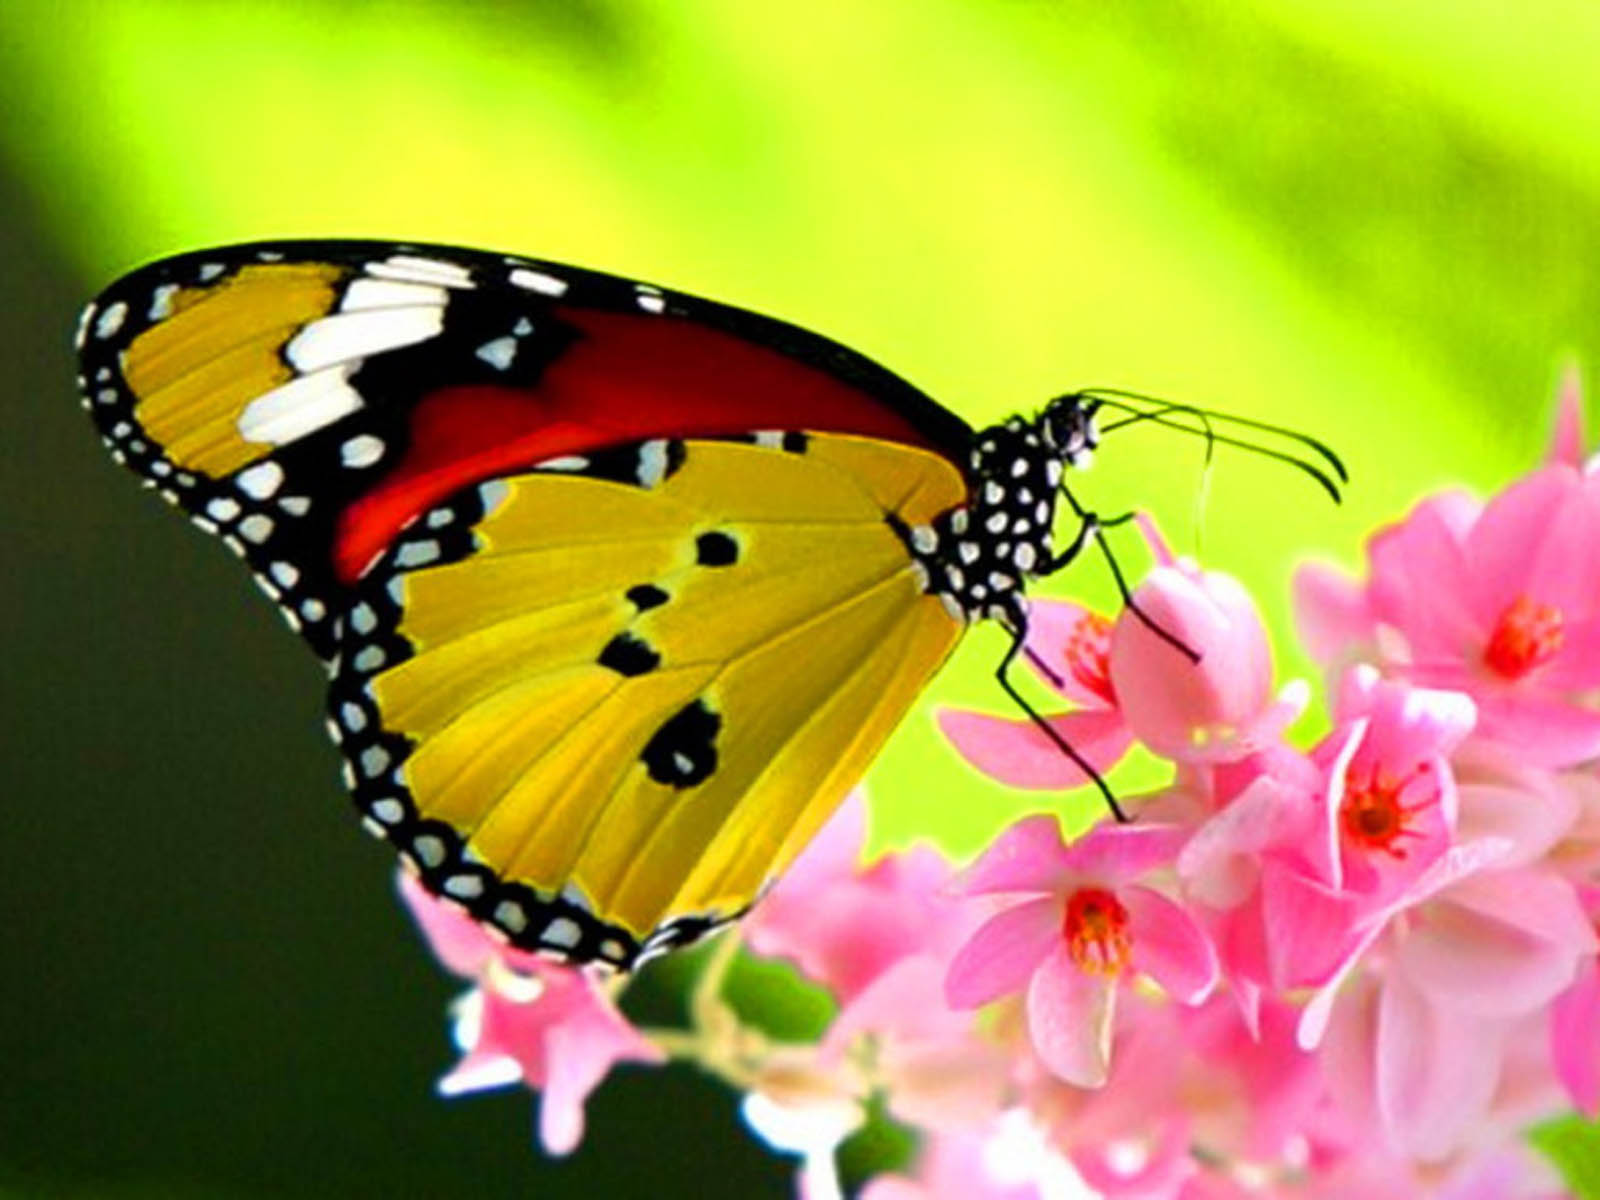 [50+] Beautiful Butterfly Wallpapers for Desktop | WallpaperSafari.com